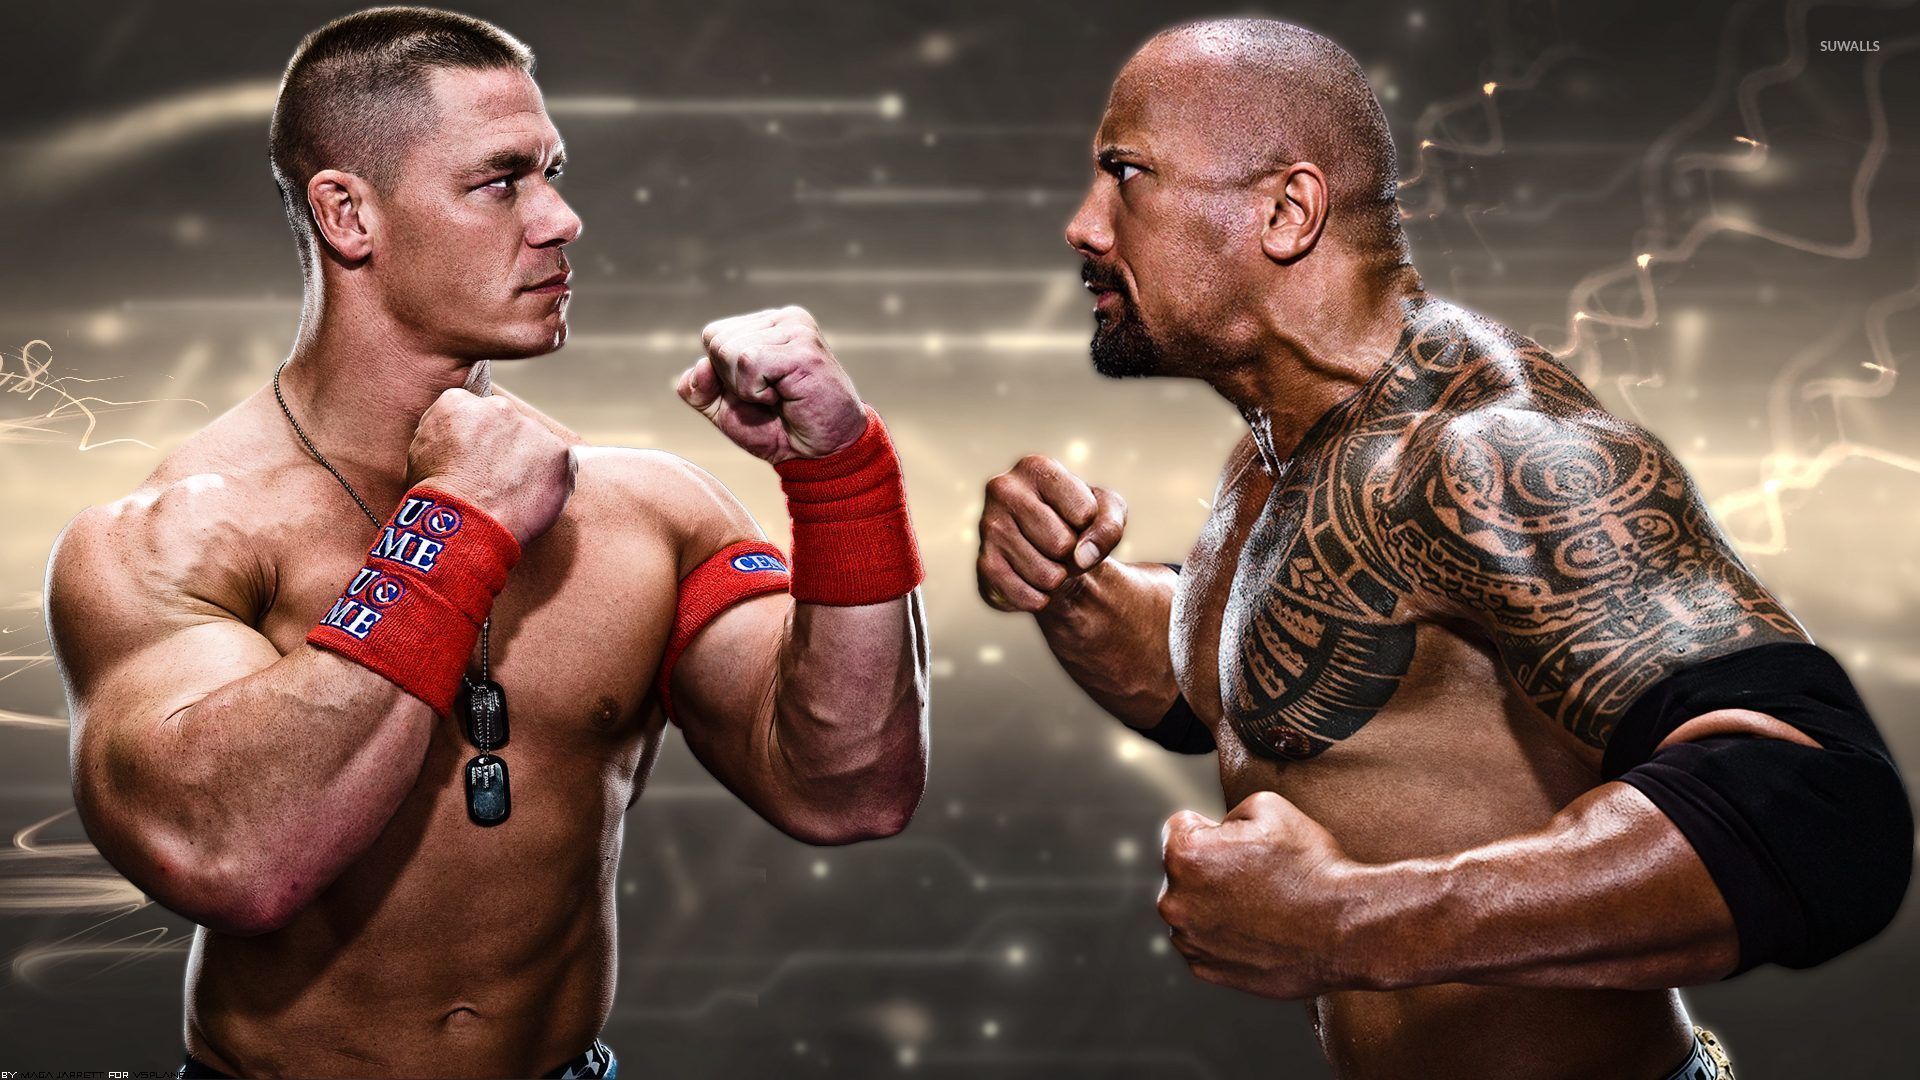 John Cena vs The Rock wallpaper wallpaper